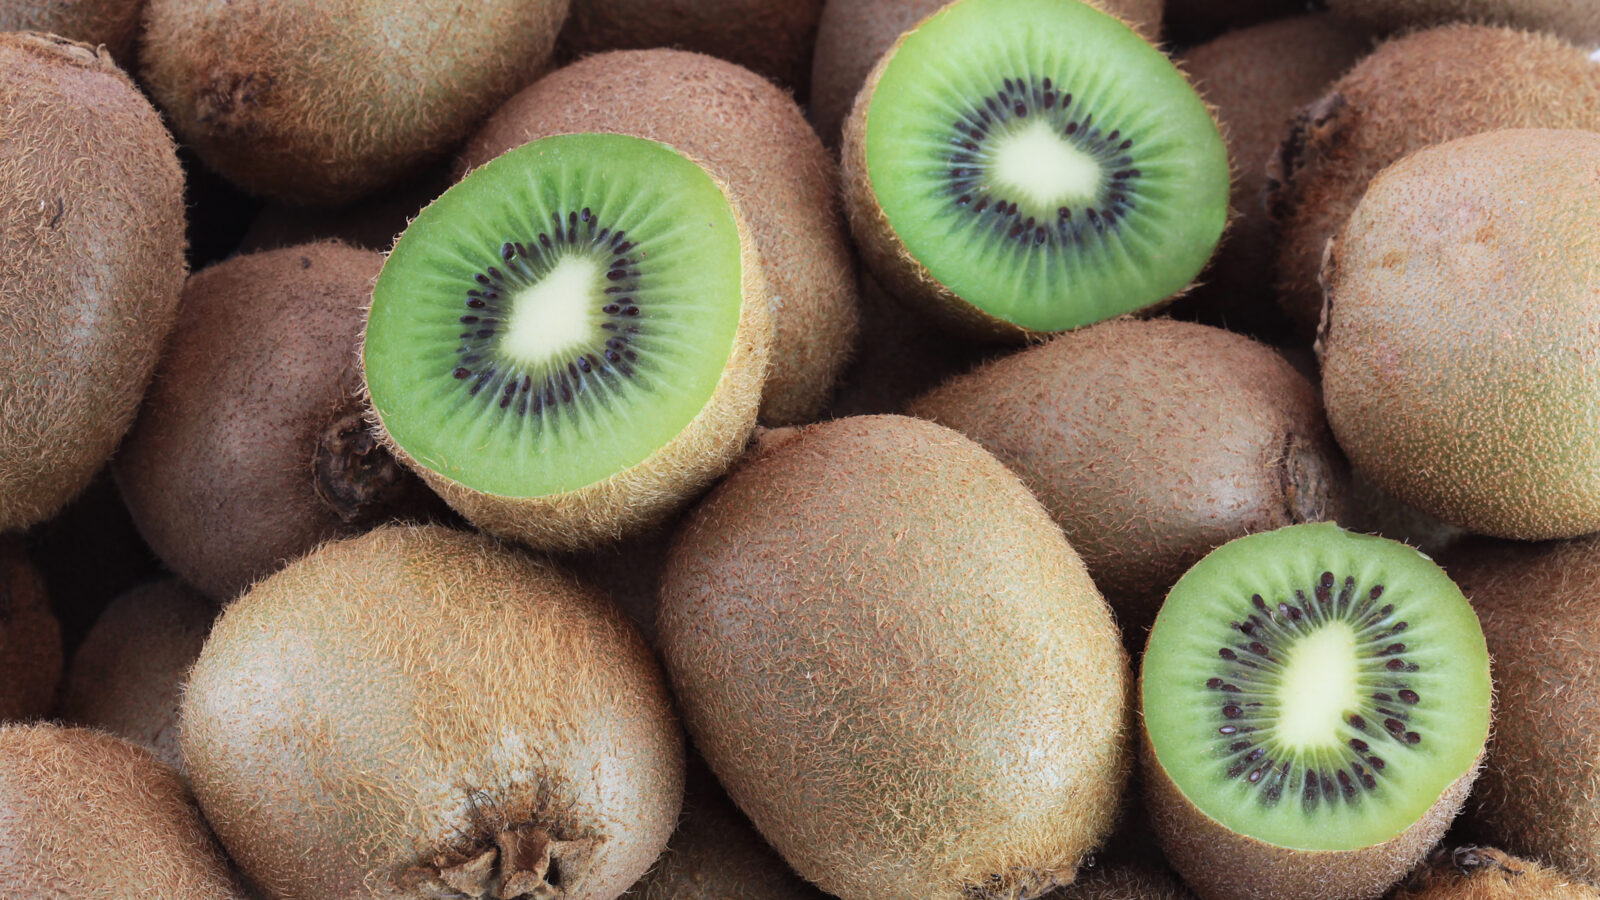 A few fresh kiwi fruits